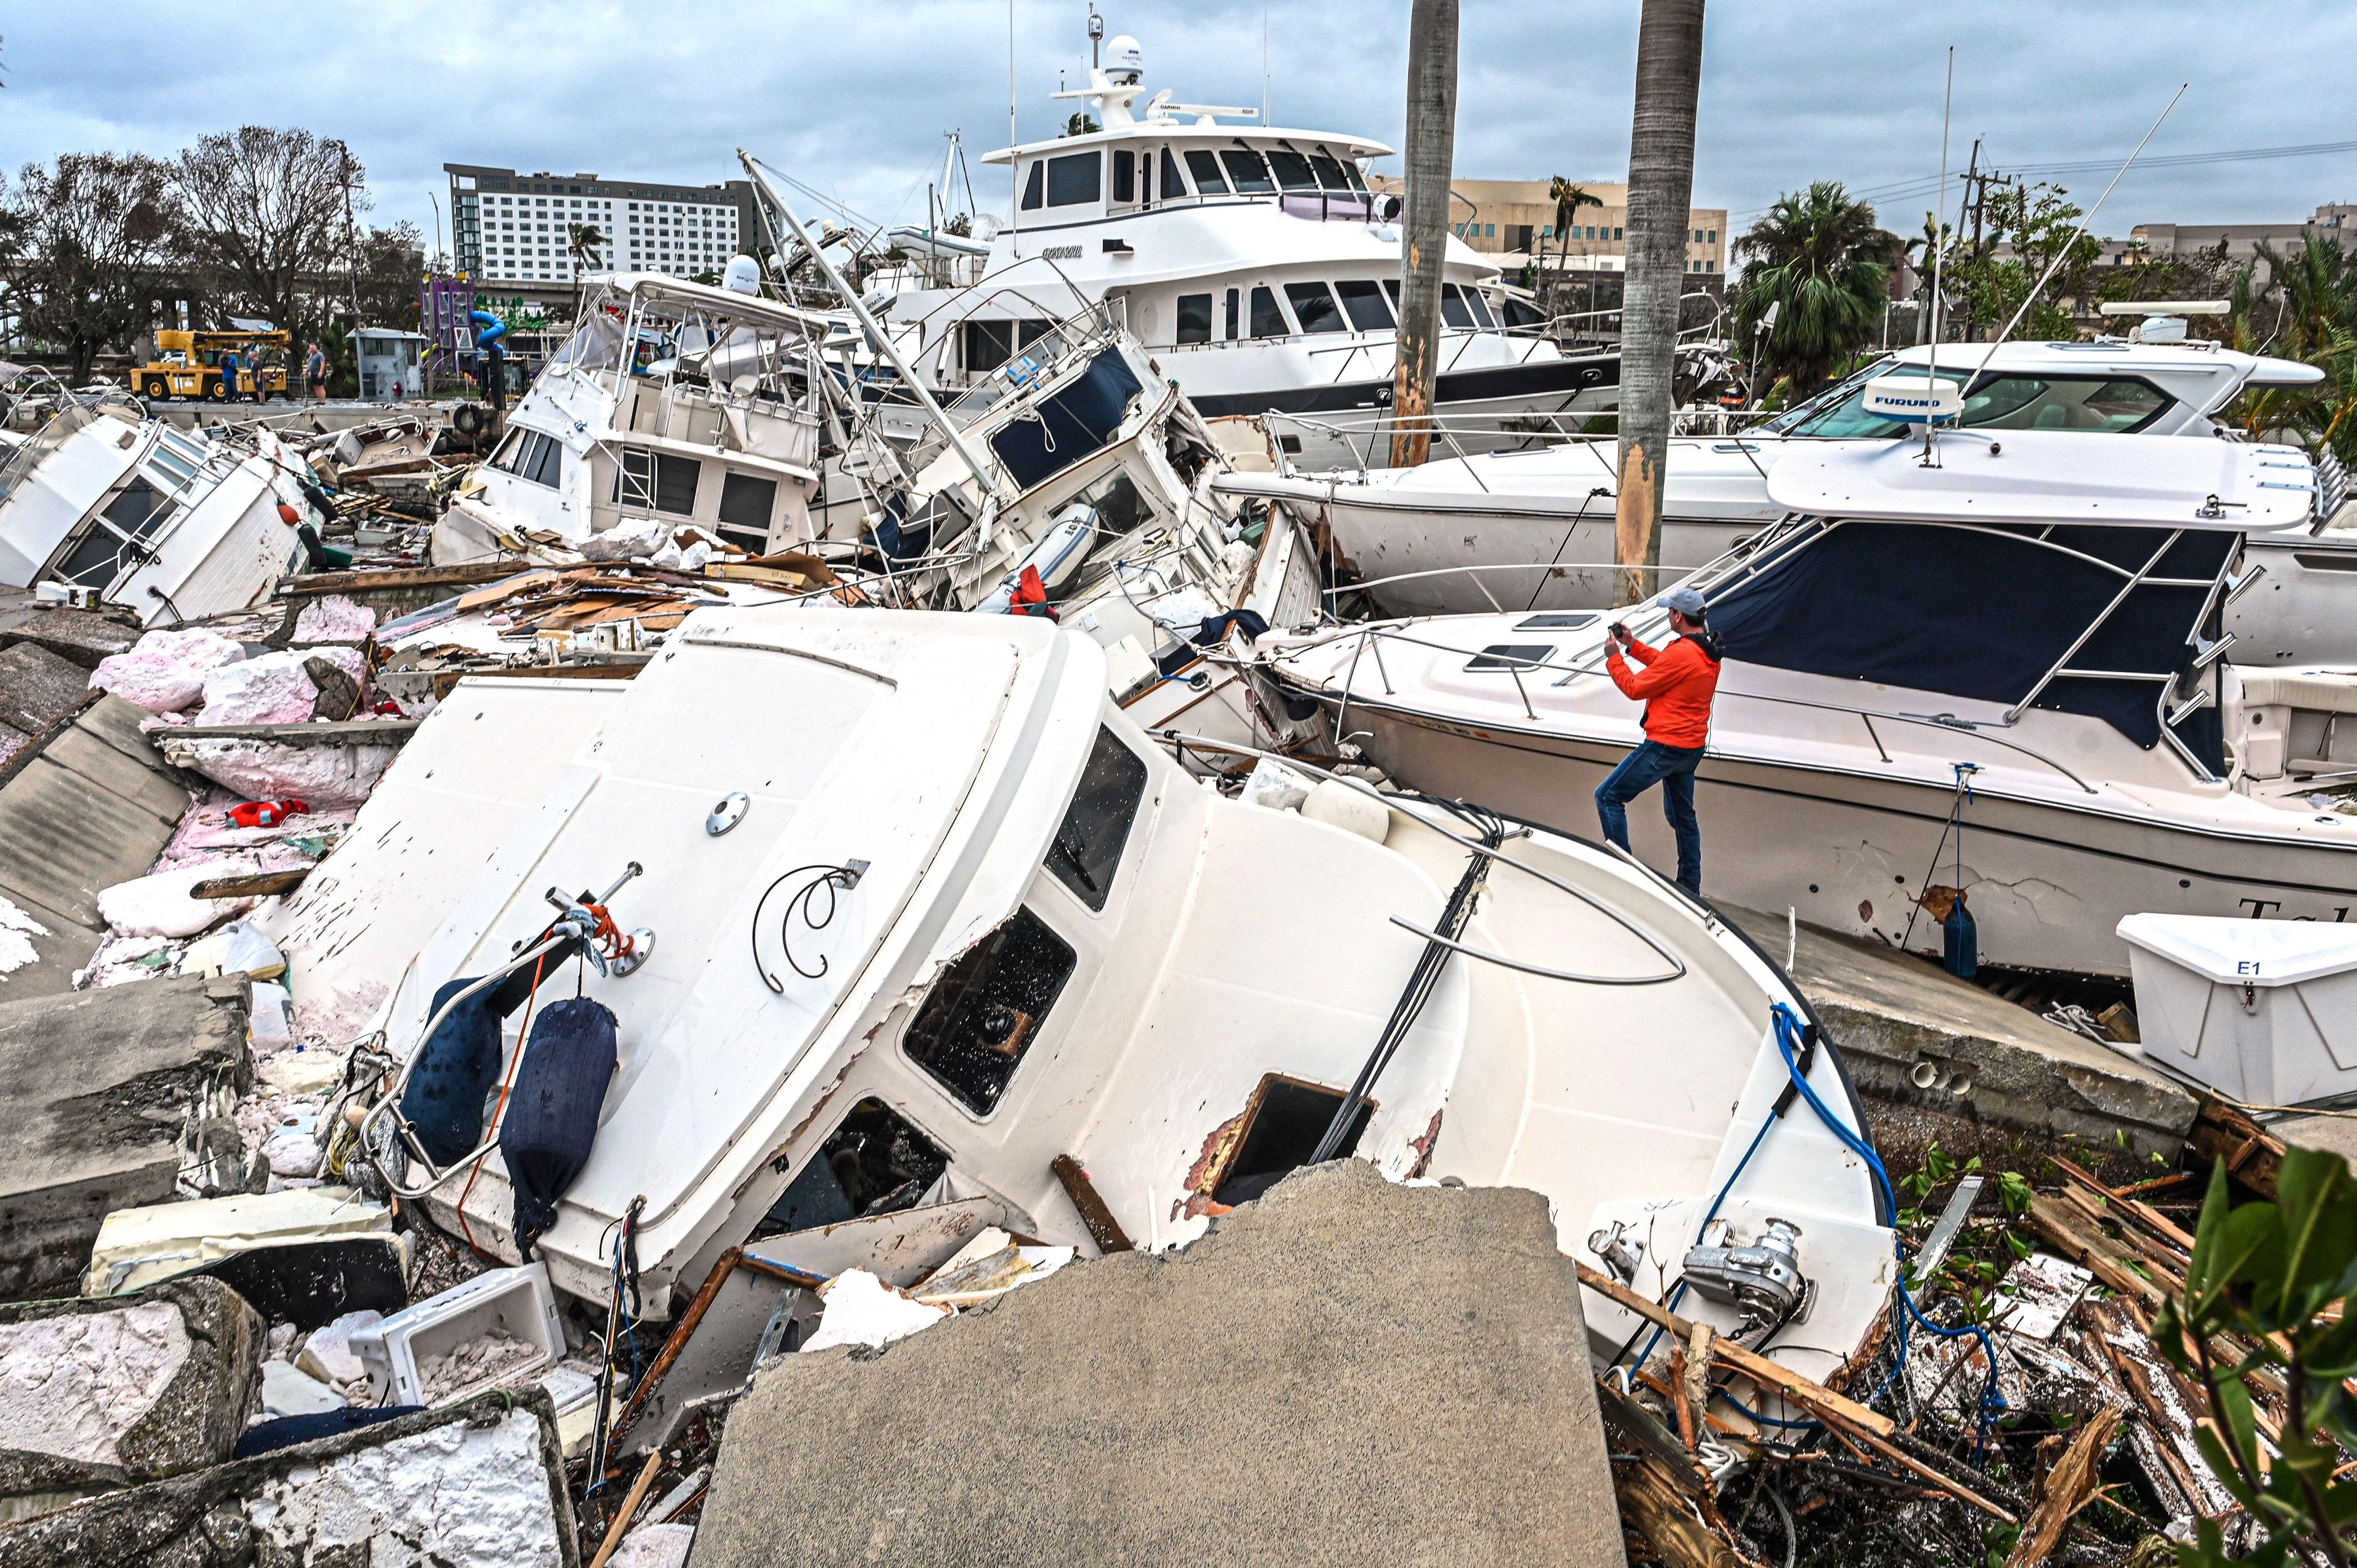 Damaged boats in a pile following Hurricane Ian